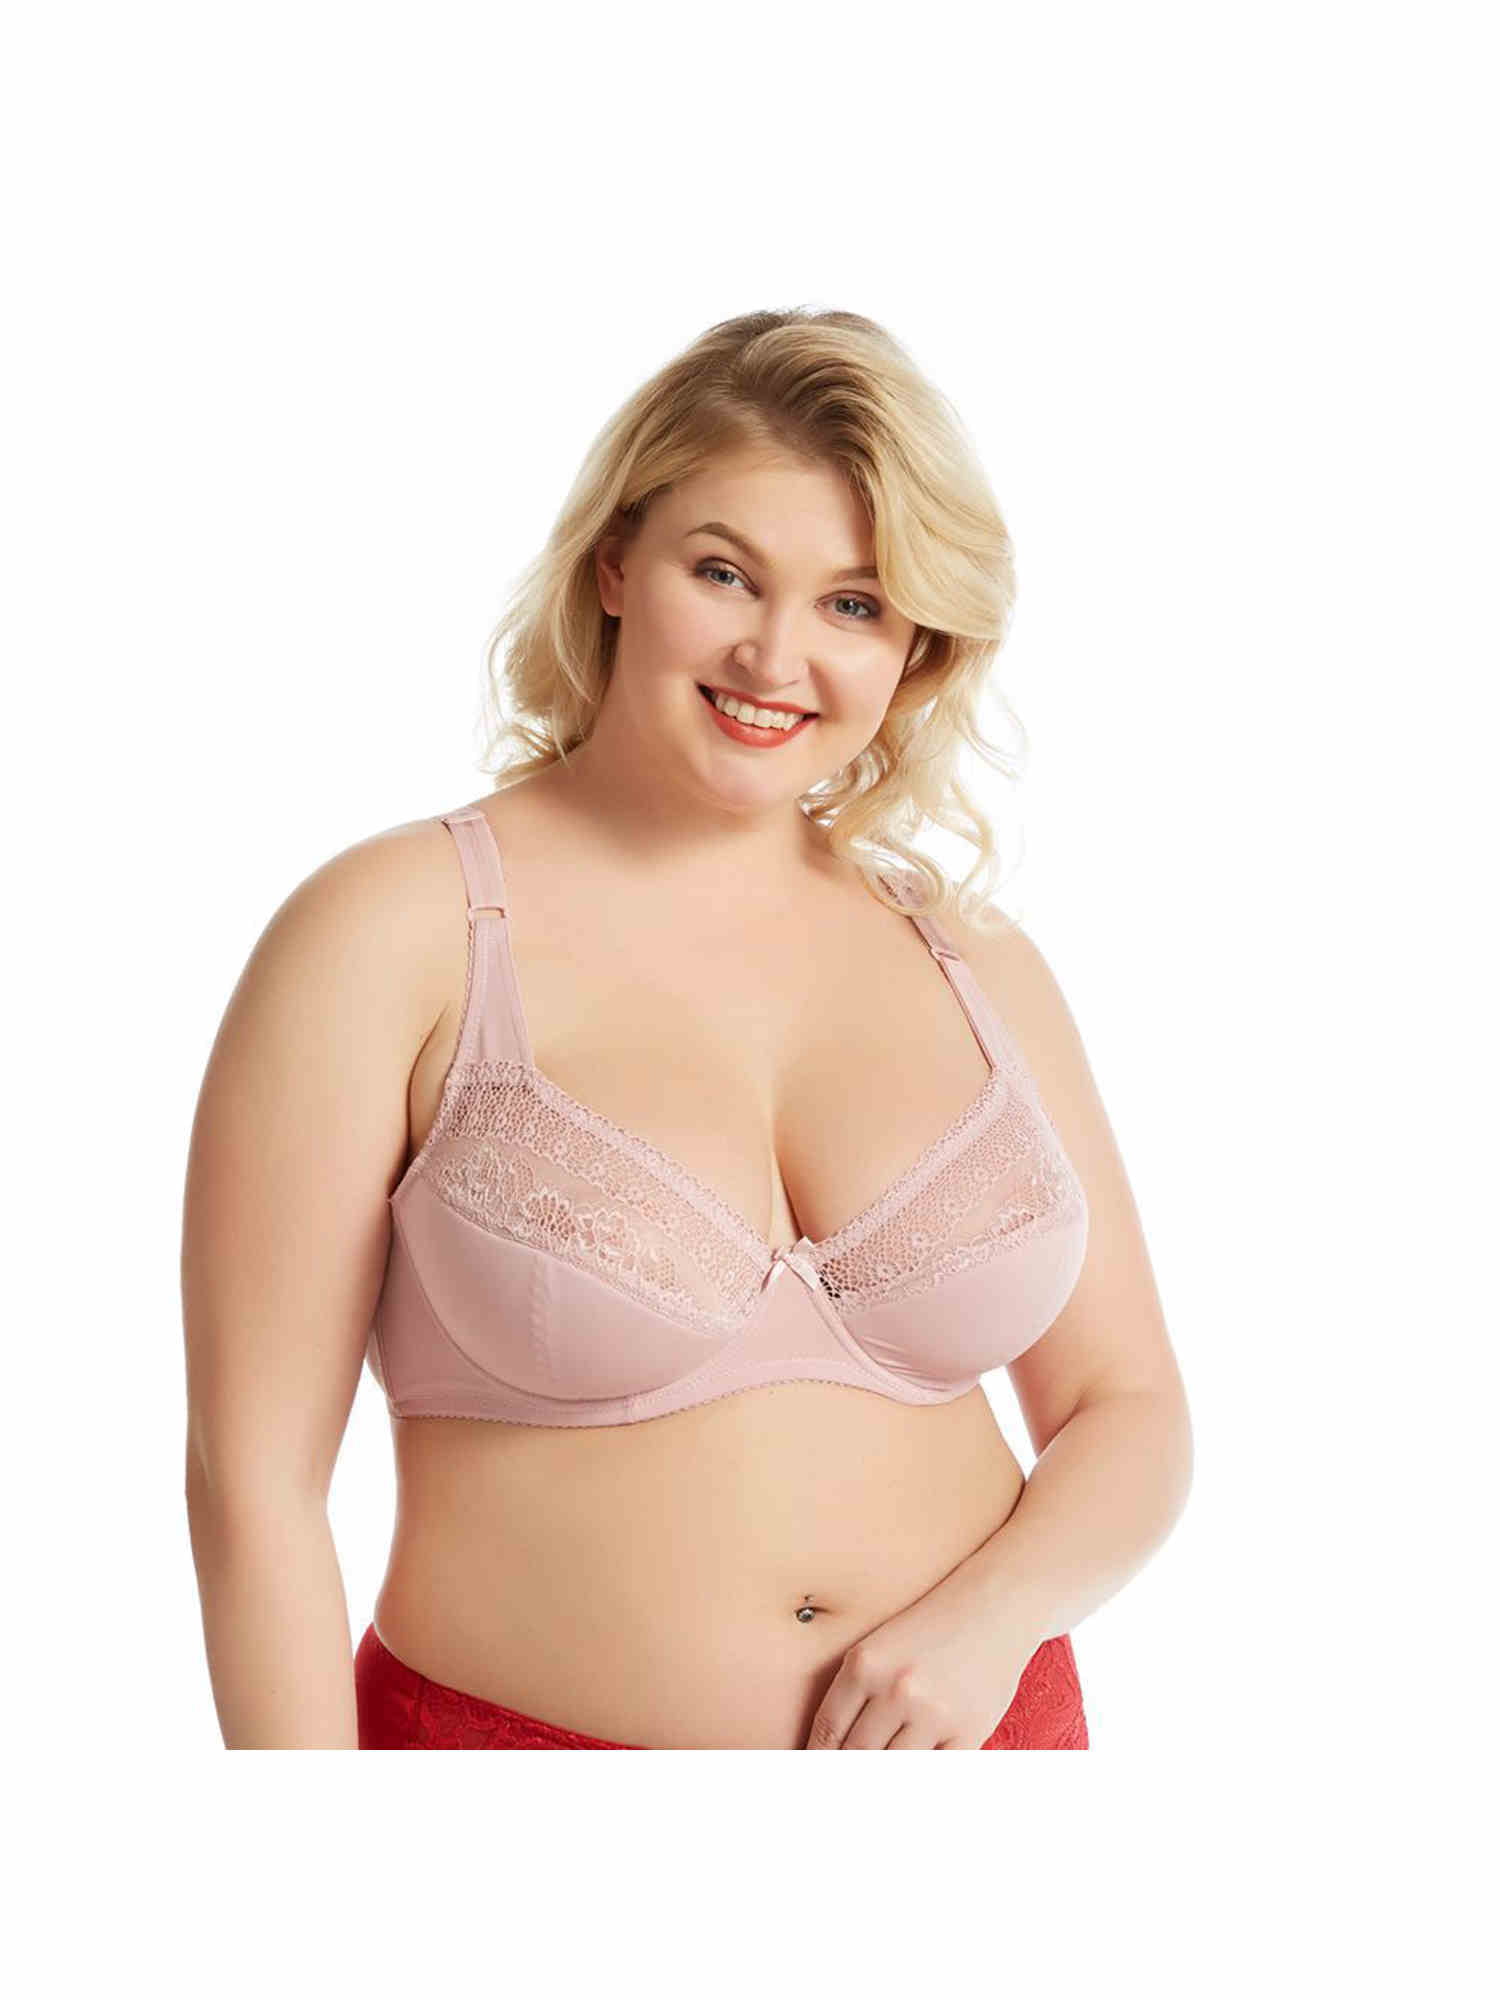 frugter succes flicker Lionstill Women's Plus Size Lace Push Up Bra G Cup - Walmart.com